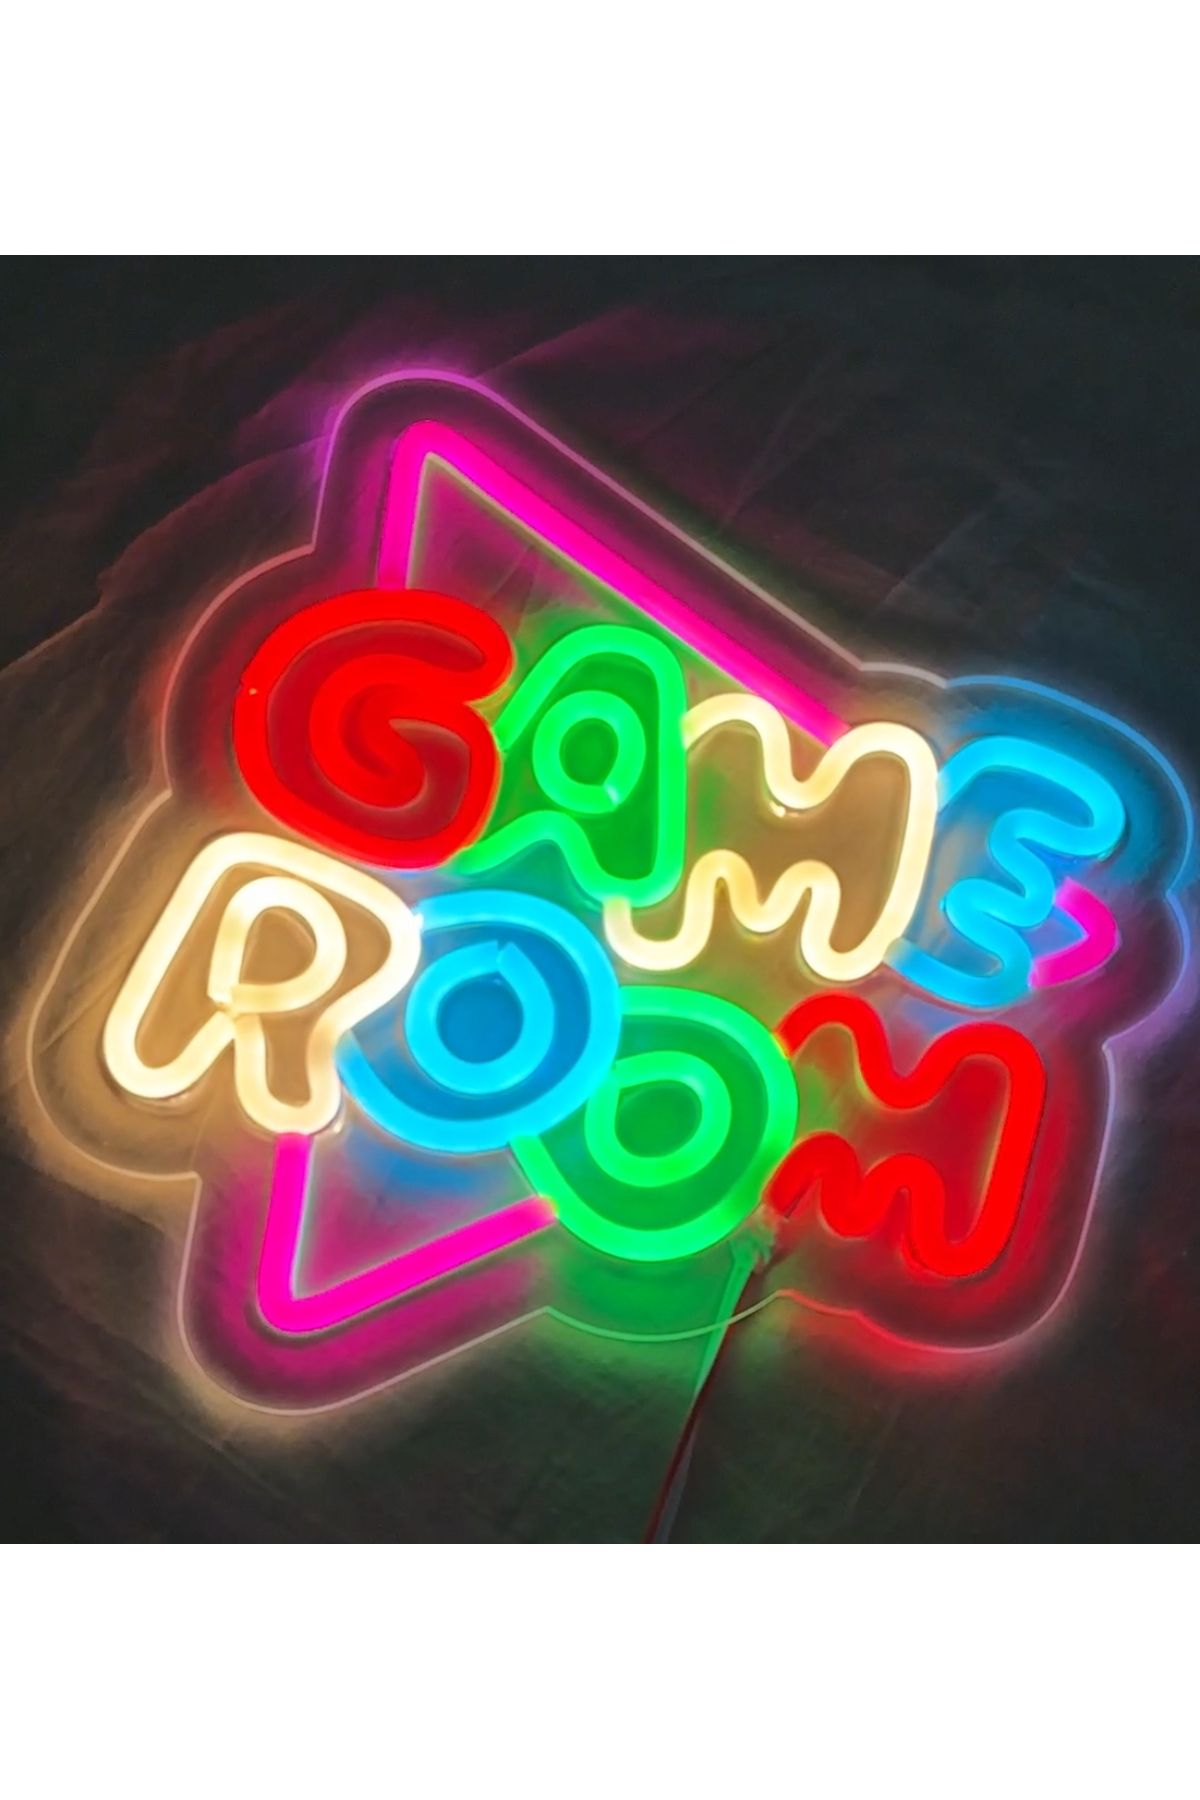 Neon Game Room neon led yazı